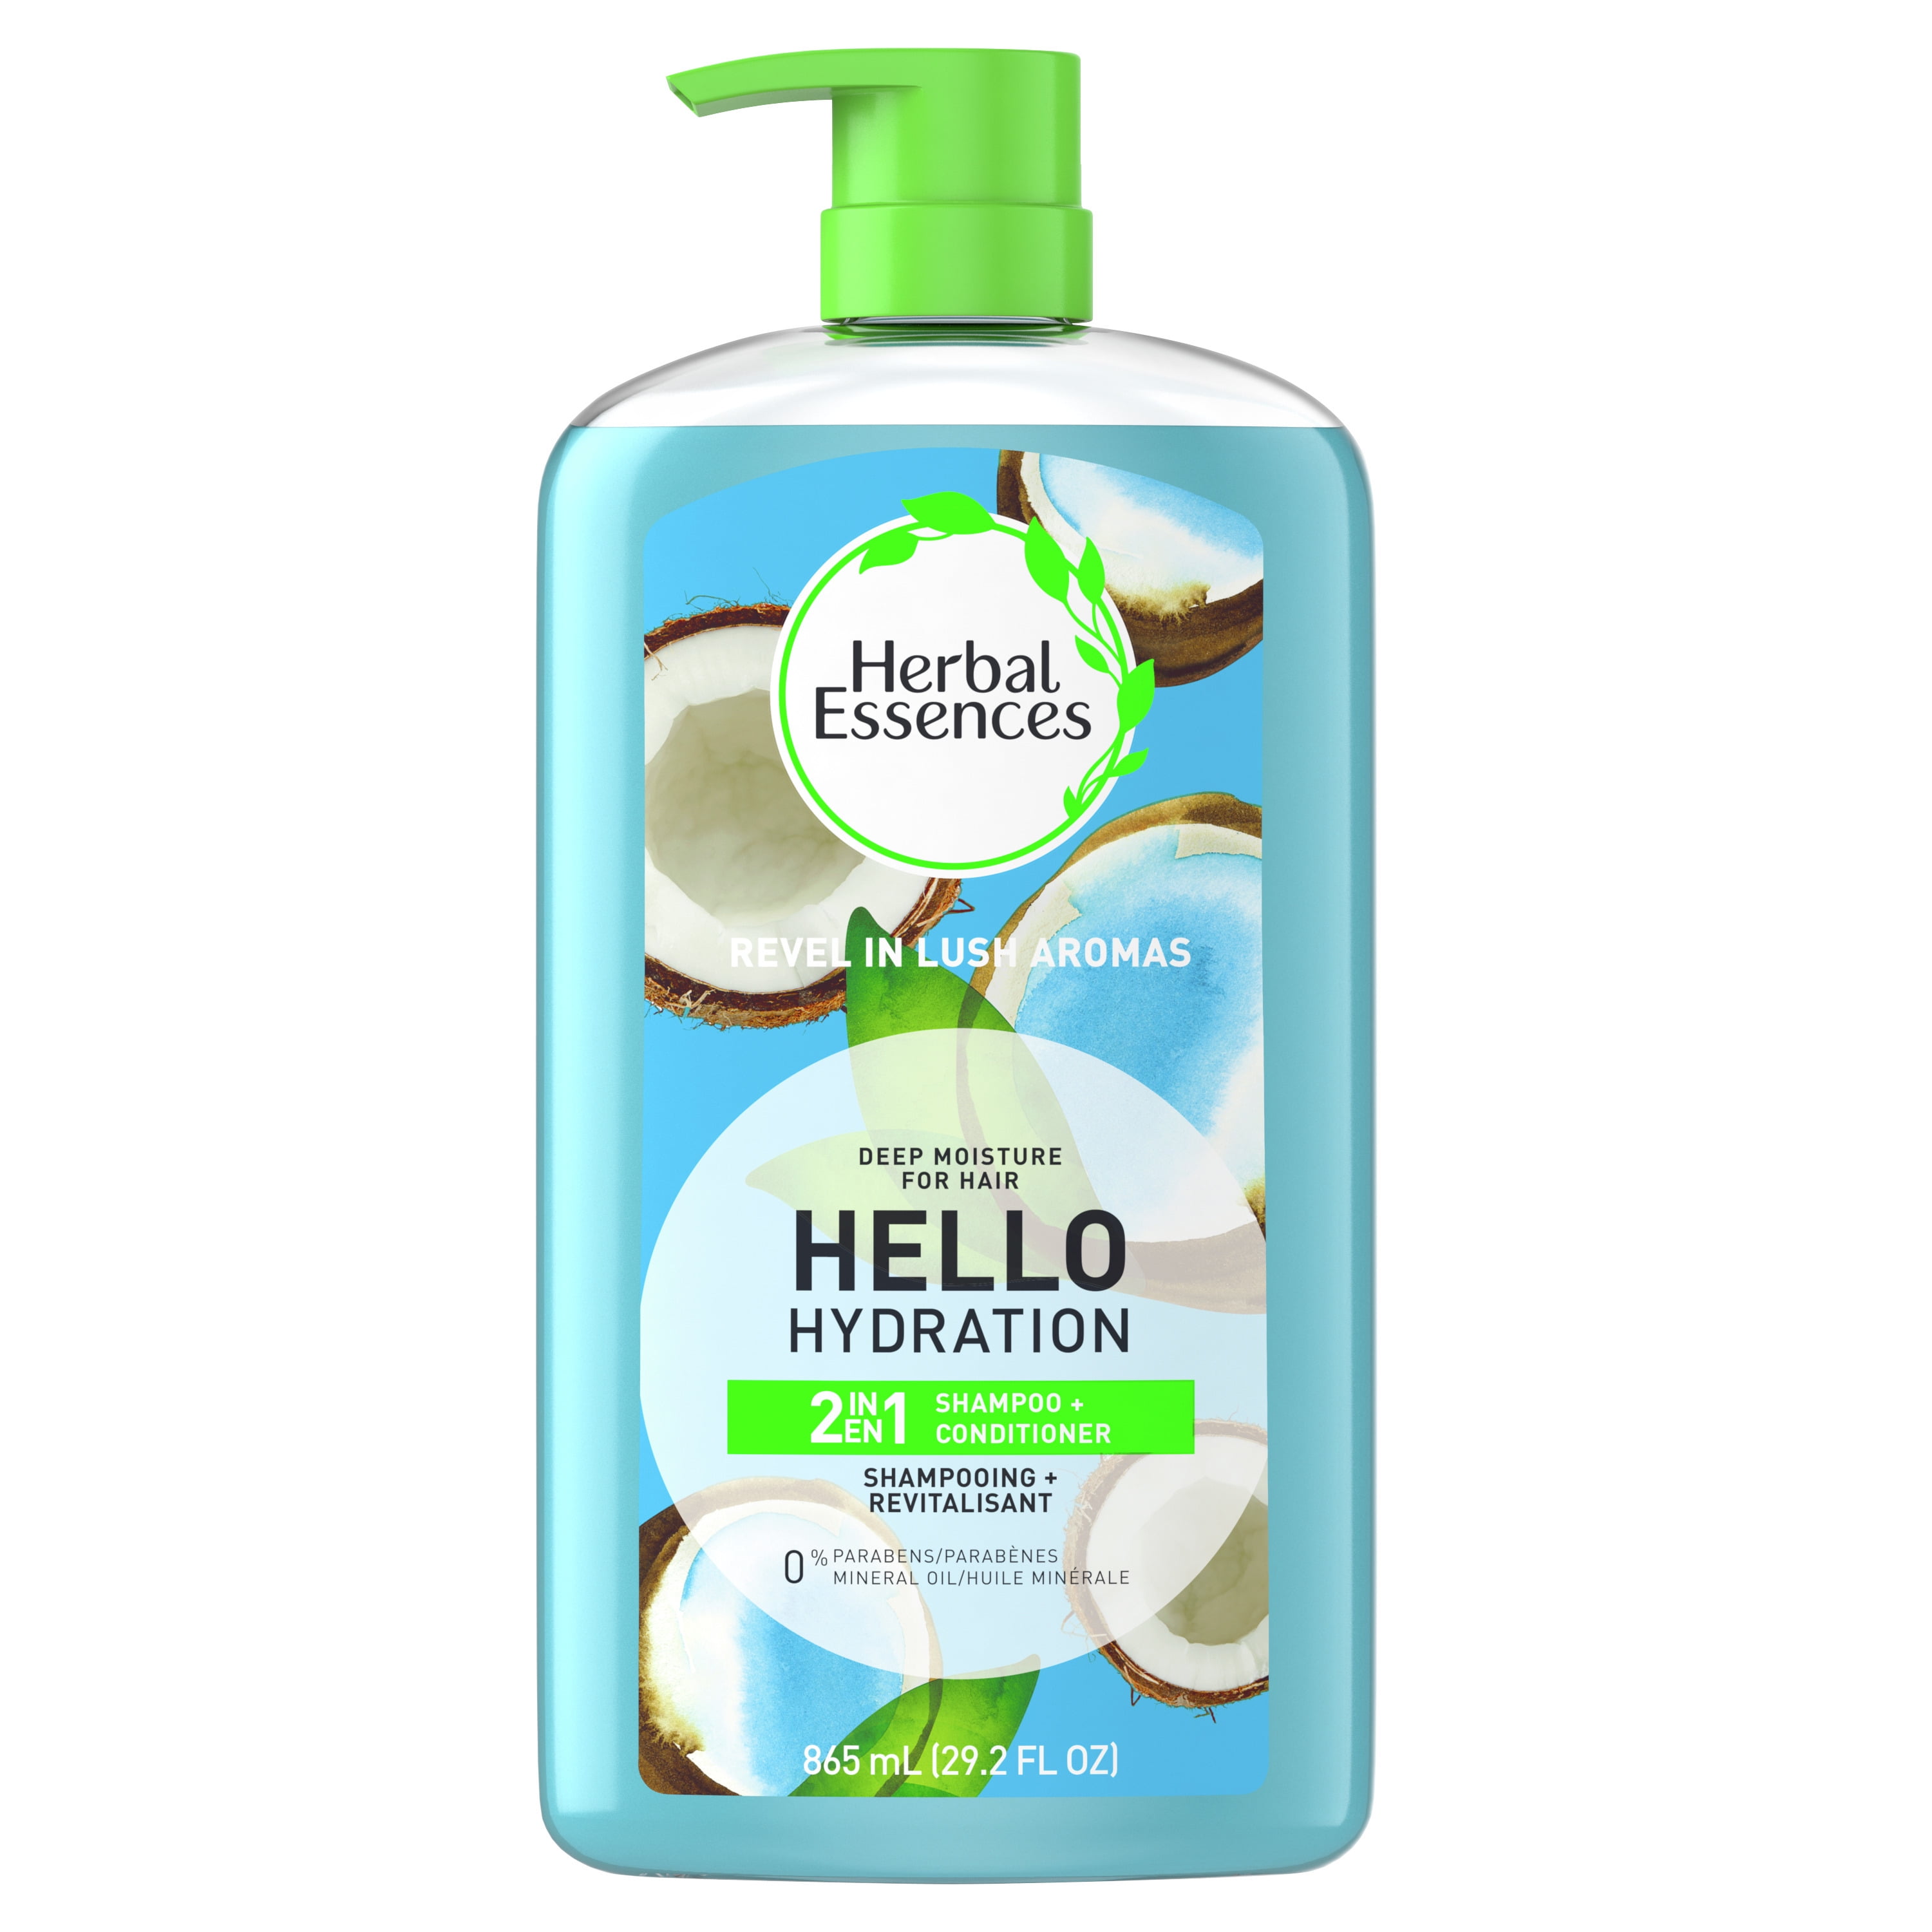 Illustrer nåde Hollow Herbal Essences Hello Hydration 2IN1 Shampoo Conditioner, Moisture for Hair  29.2 fl oz - Walmart.com